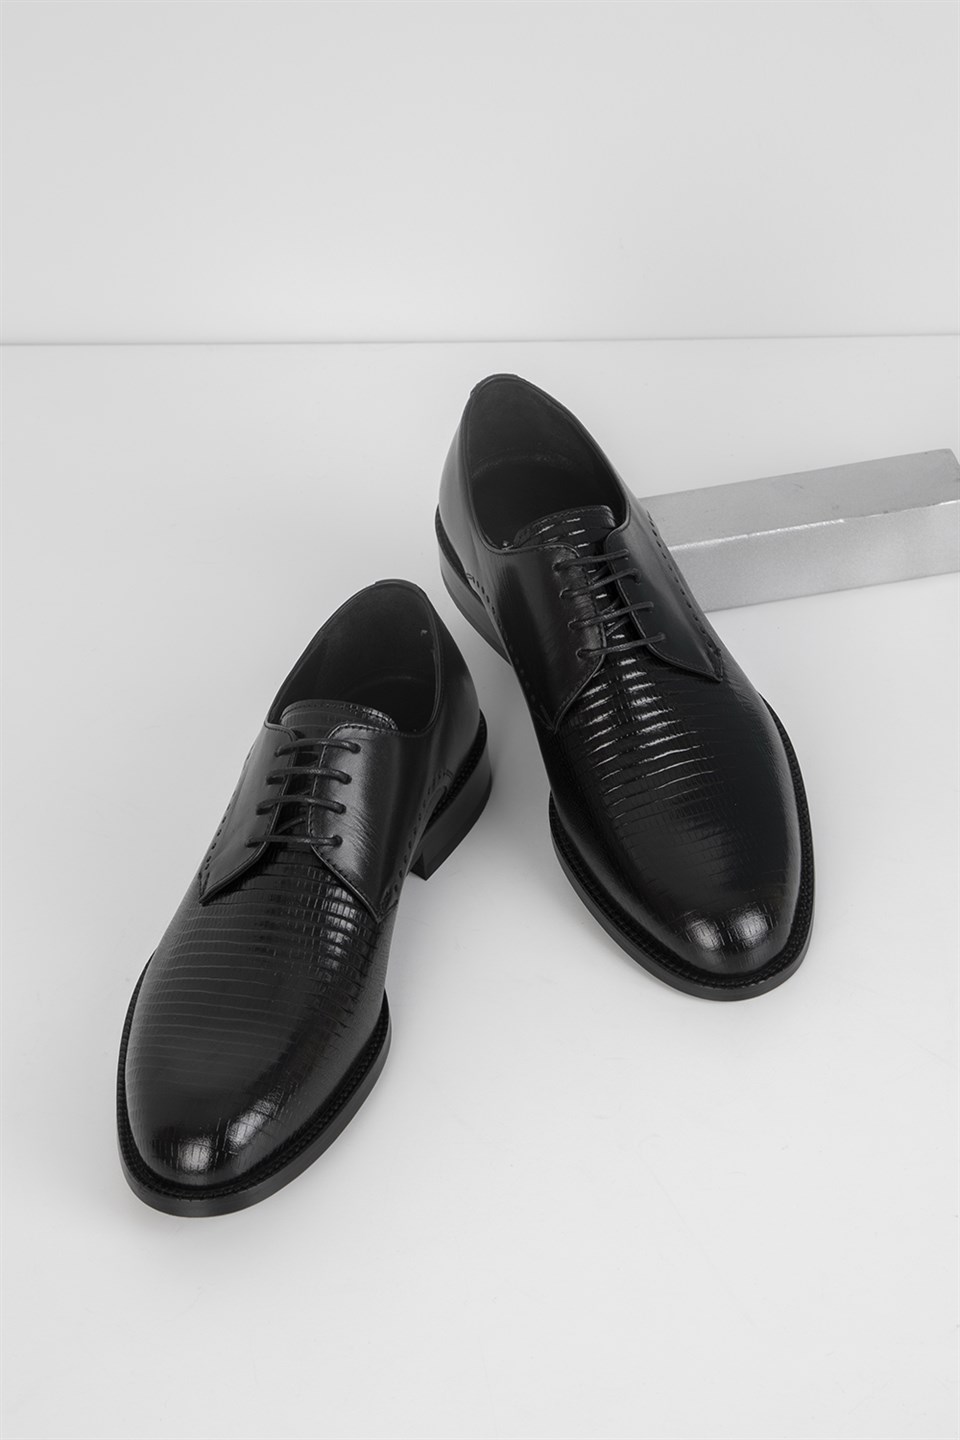 Nereid Men's Classic Shoe Black - İLVİ